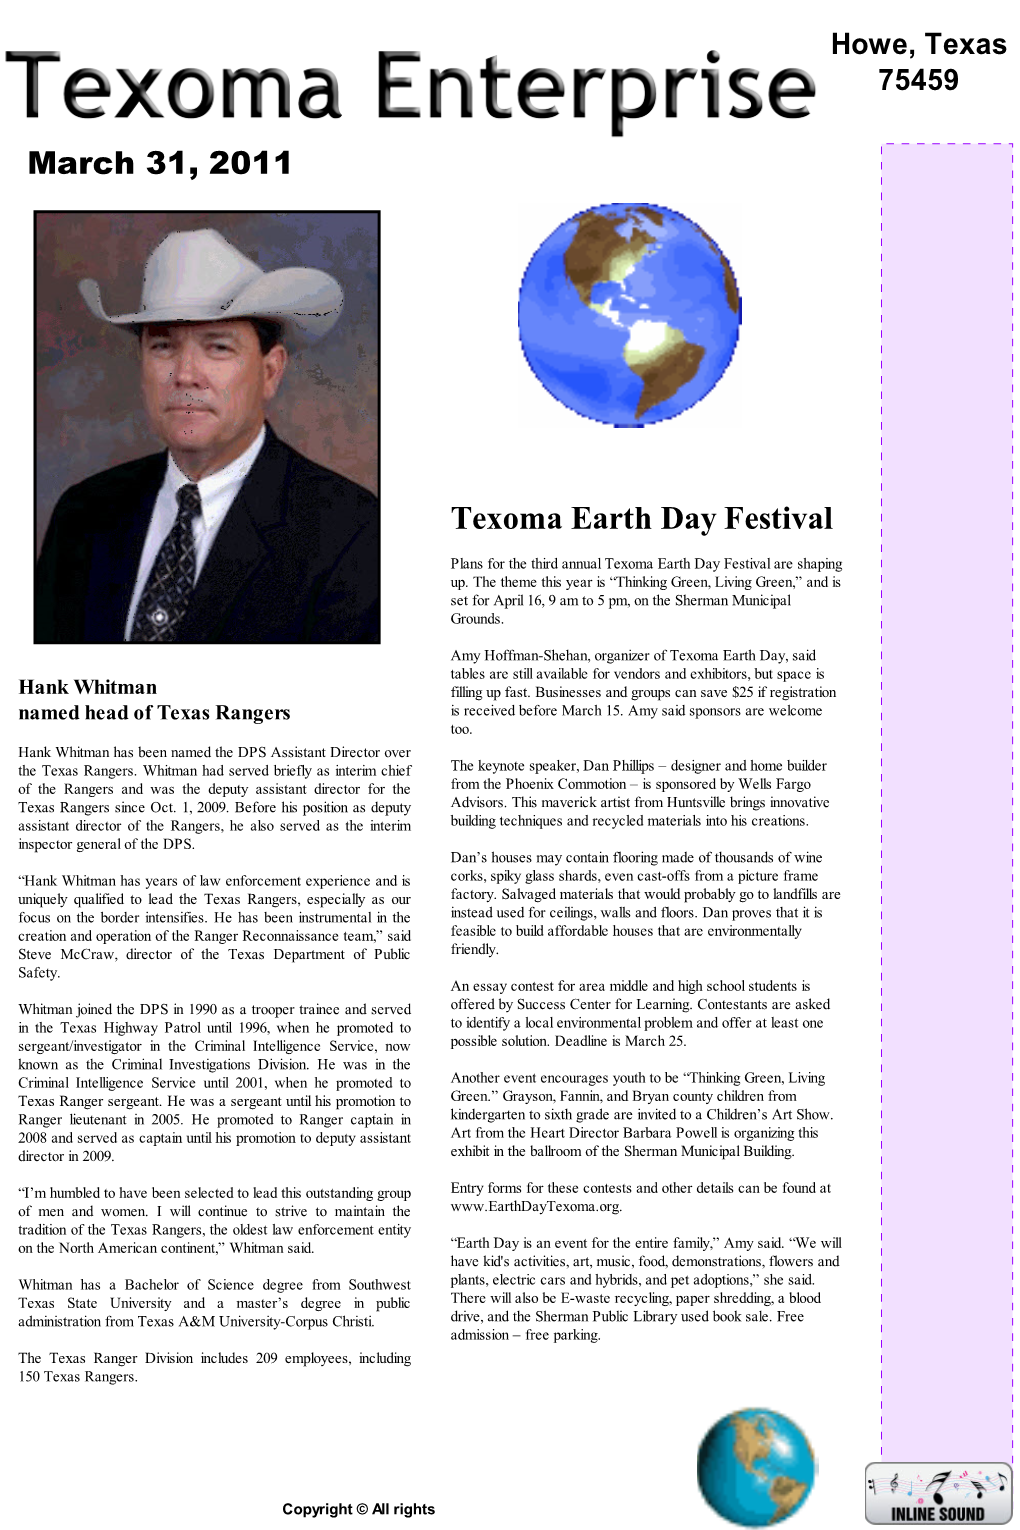 Texoma Earth Day Festival